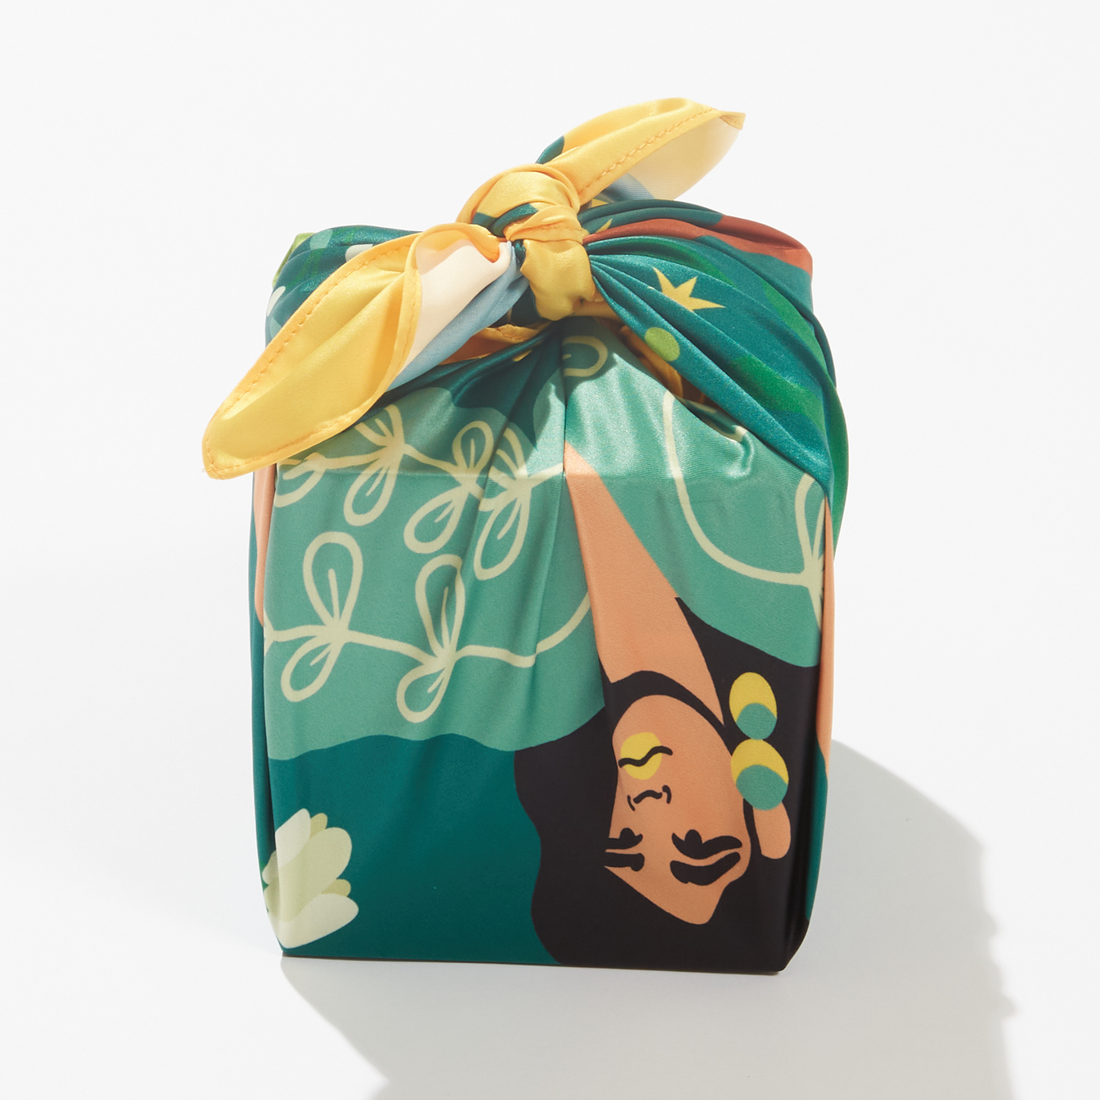 Slow Down | 18" Furoshiki Gift Wrap by Jerilyn Guerrero